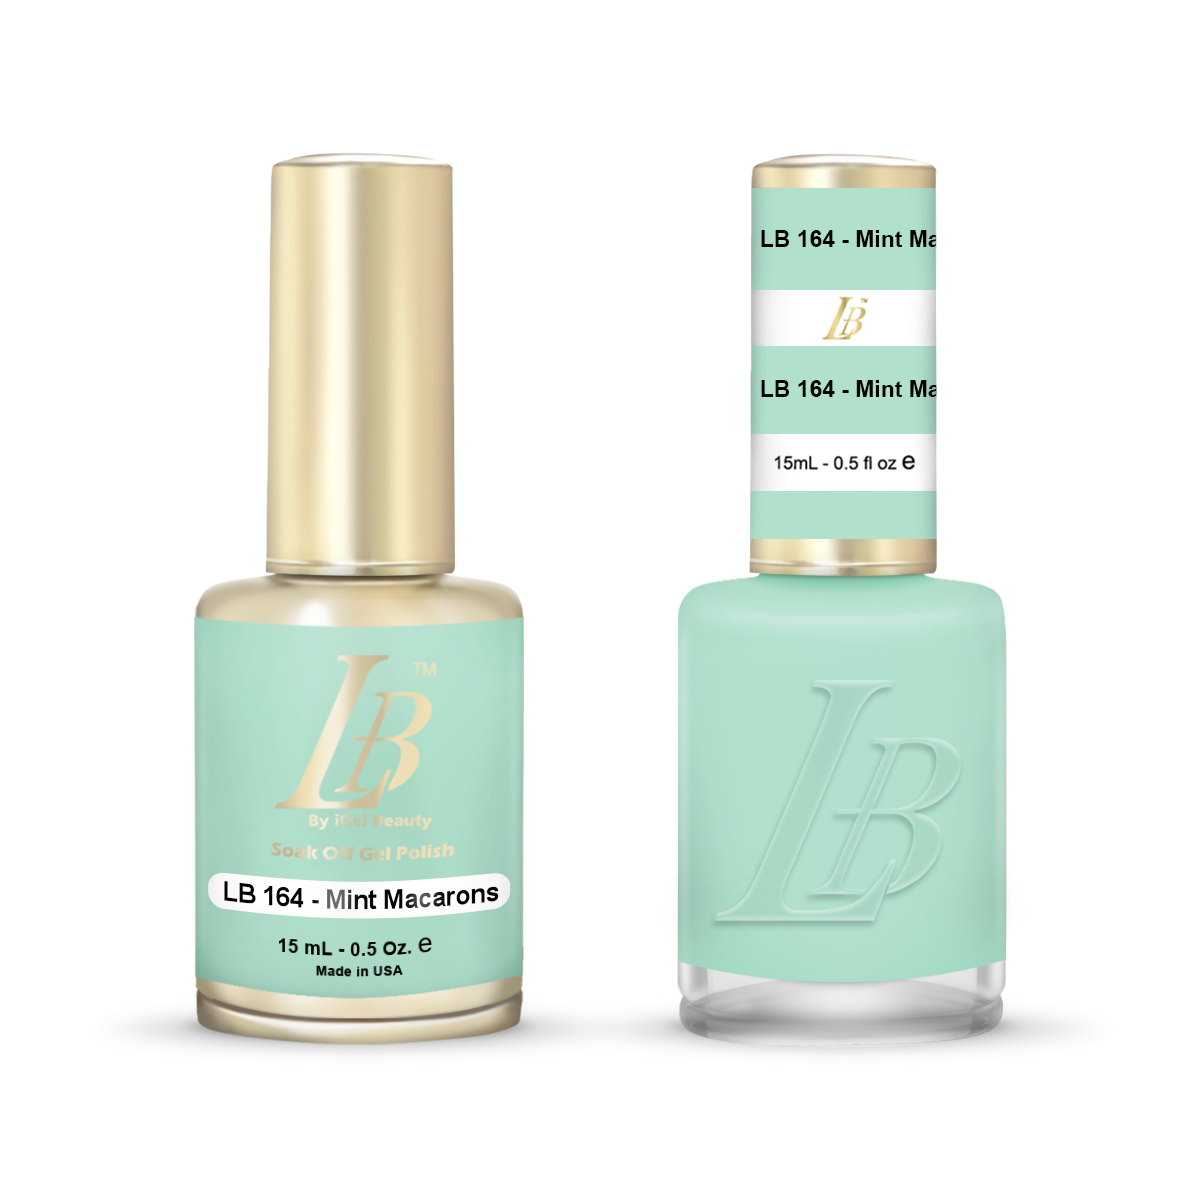 LB Duo - LB164 Mint Macarons